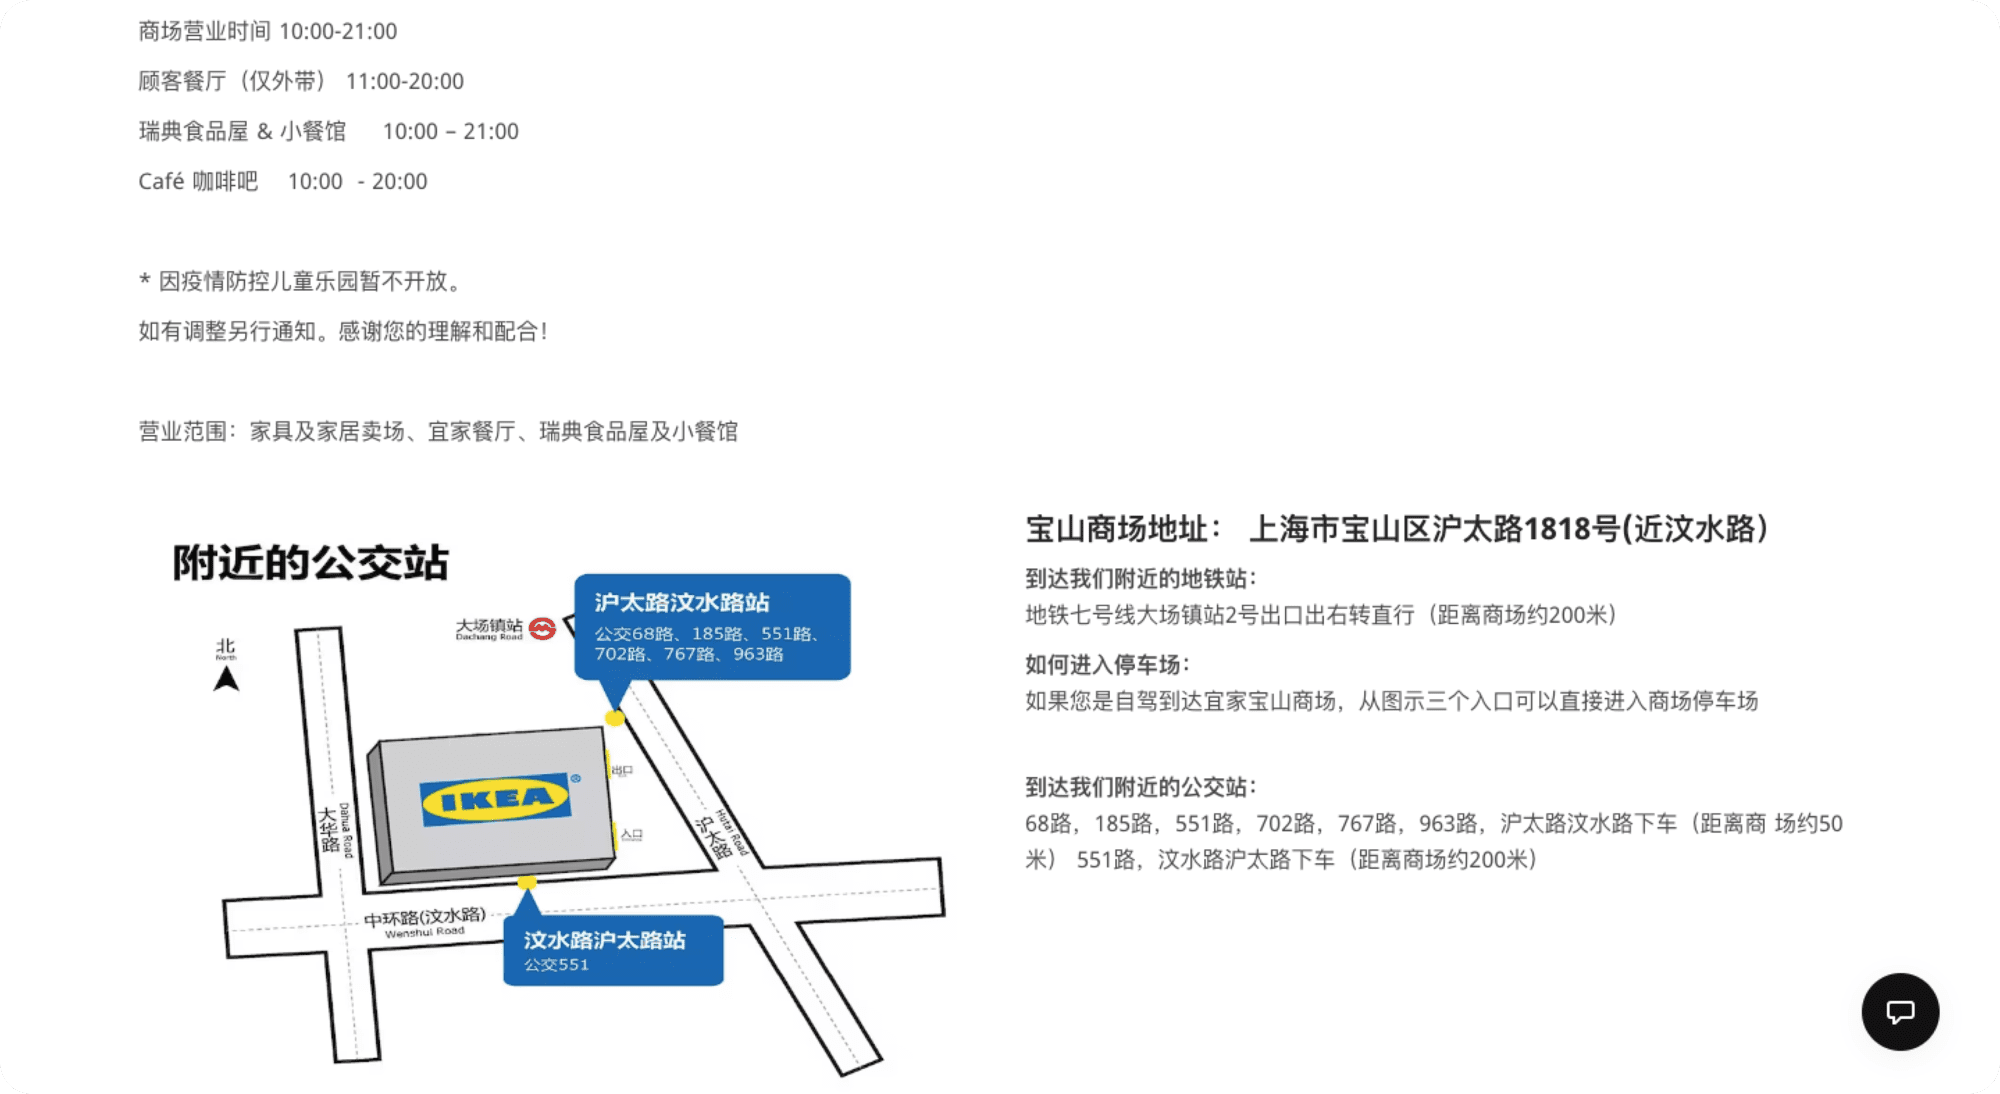 The IKEA Store Information at Shanghai Baoshan Shopping Mall